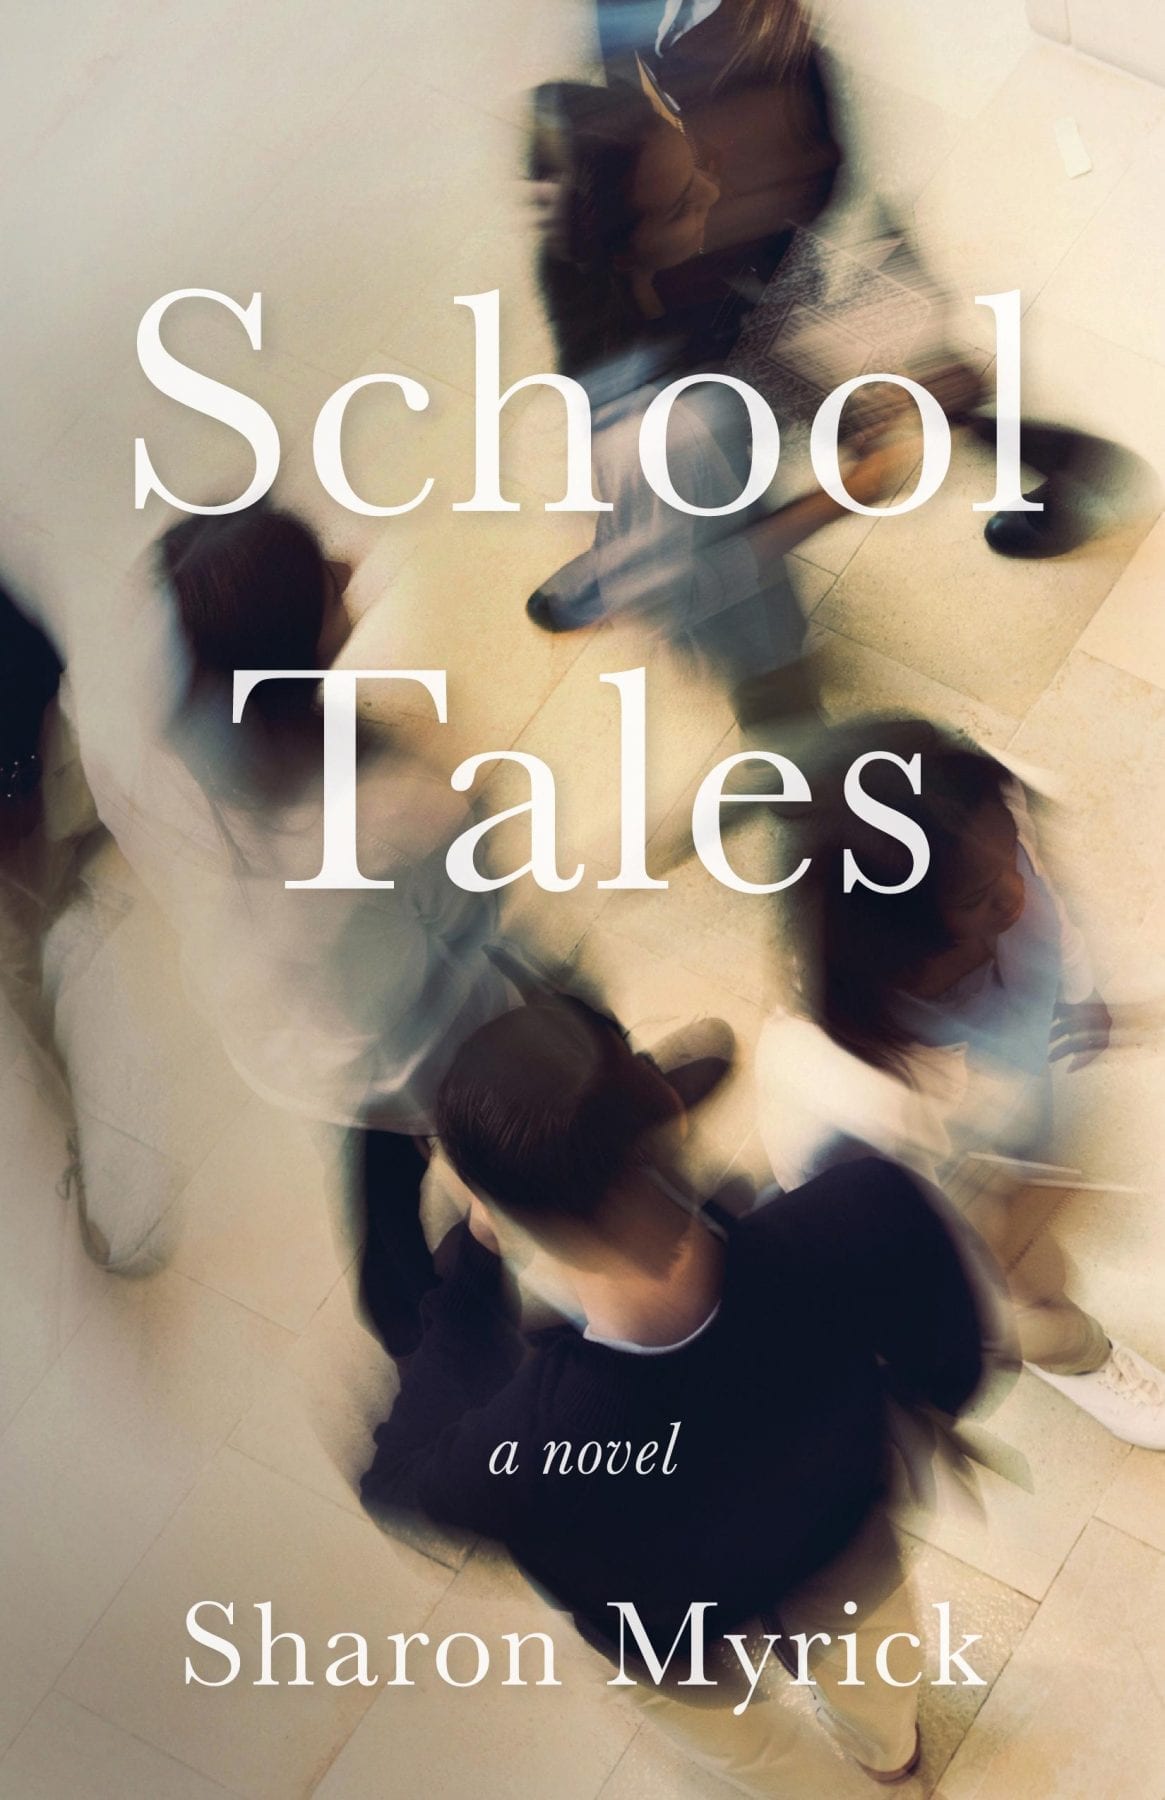 School Tales by Sharon Myrick